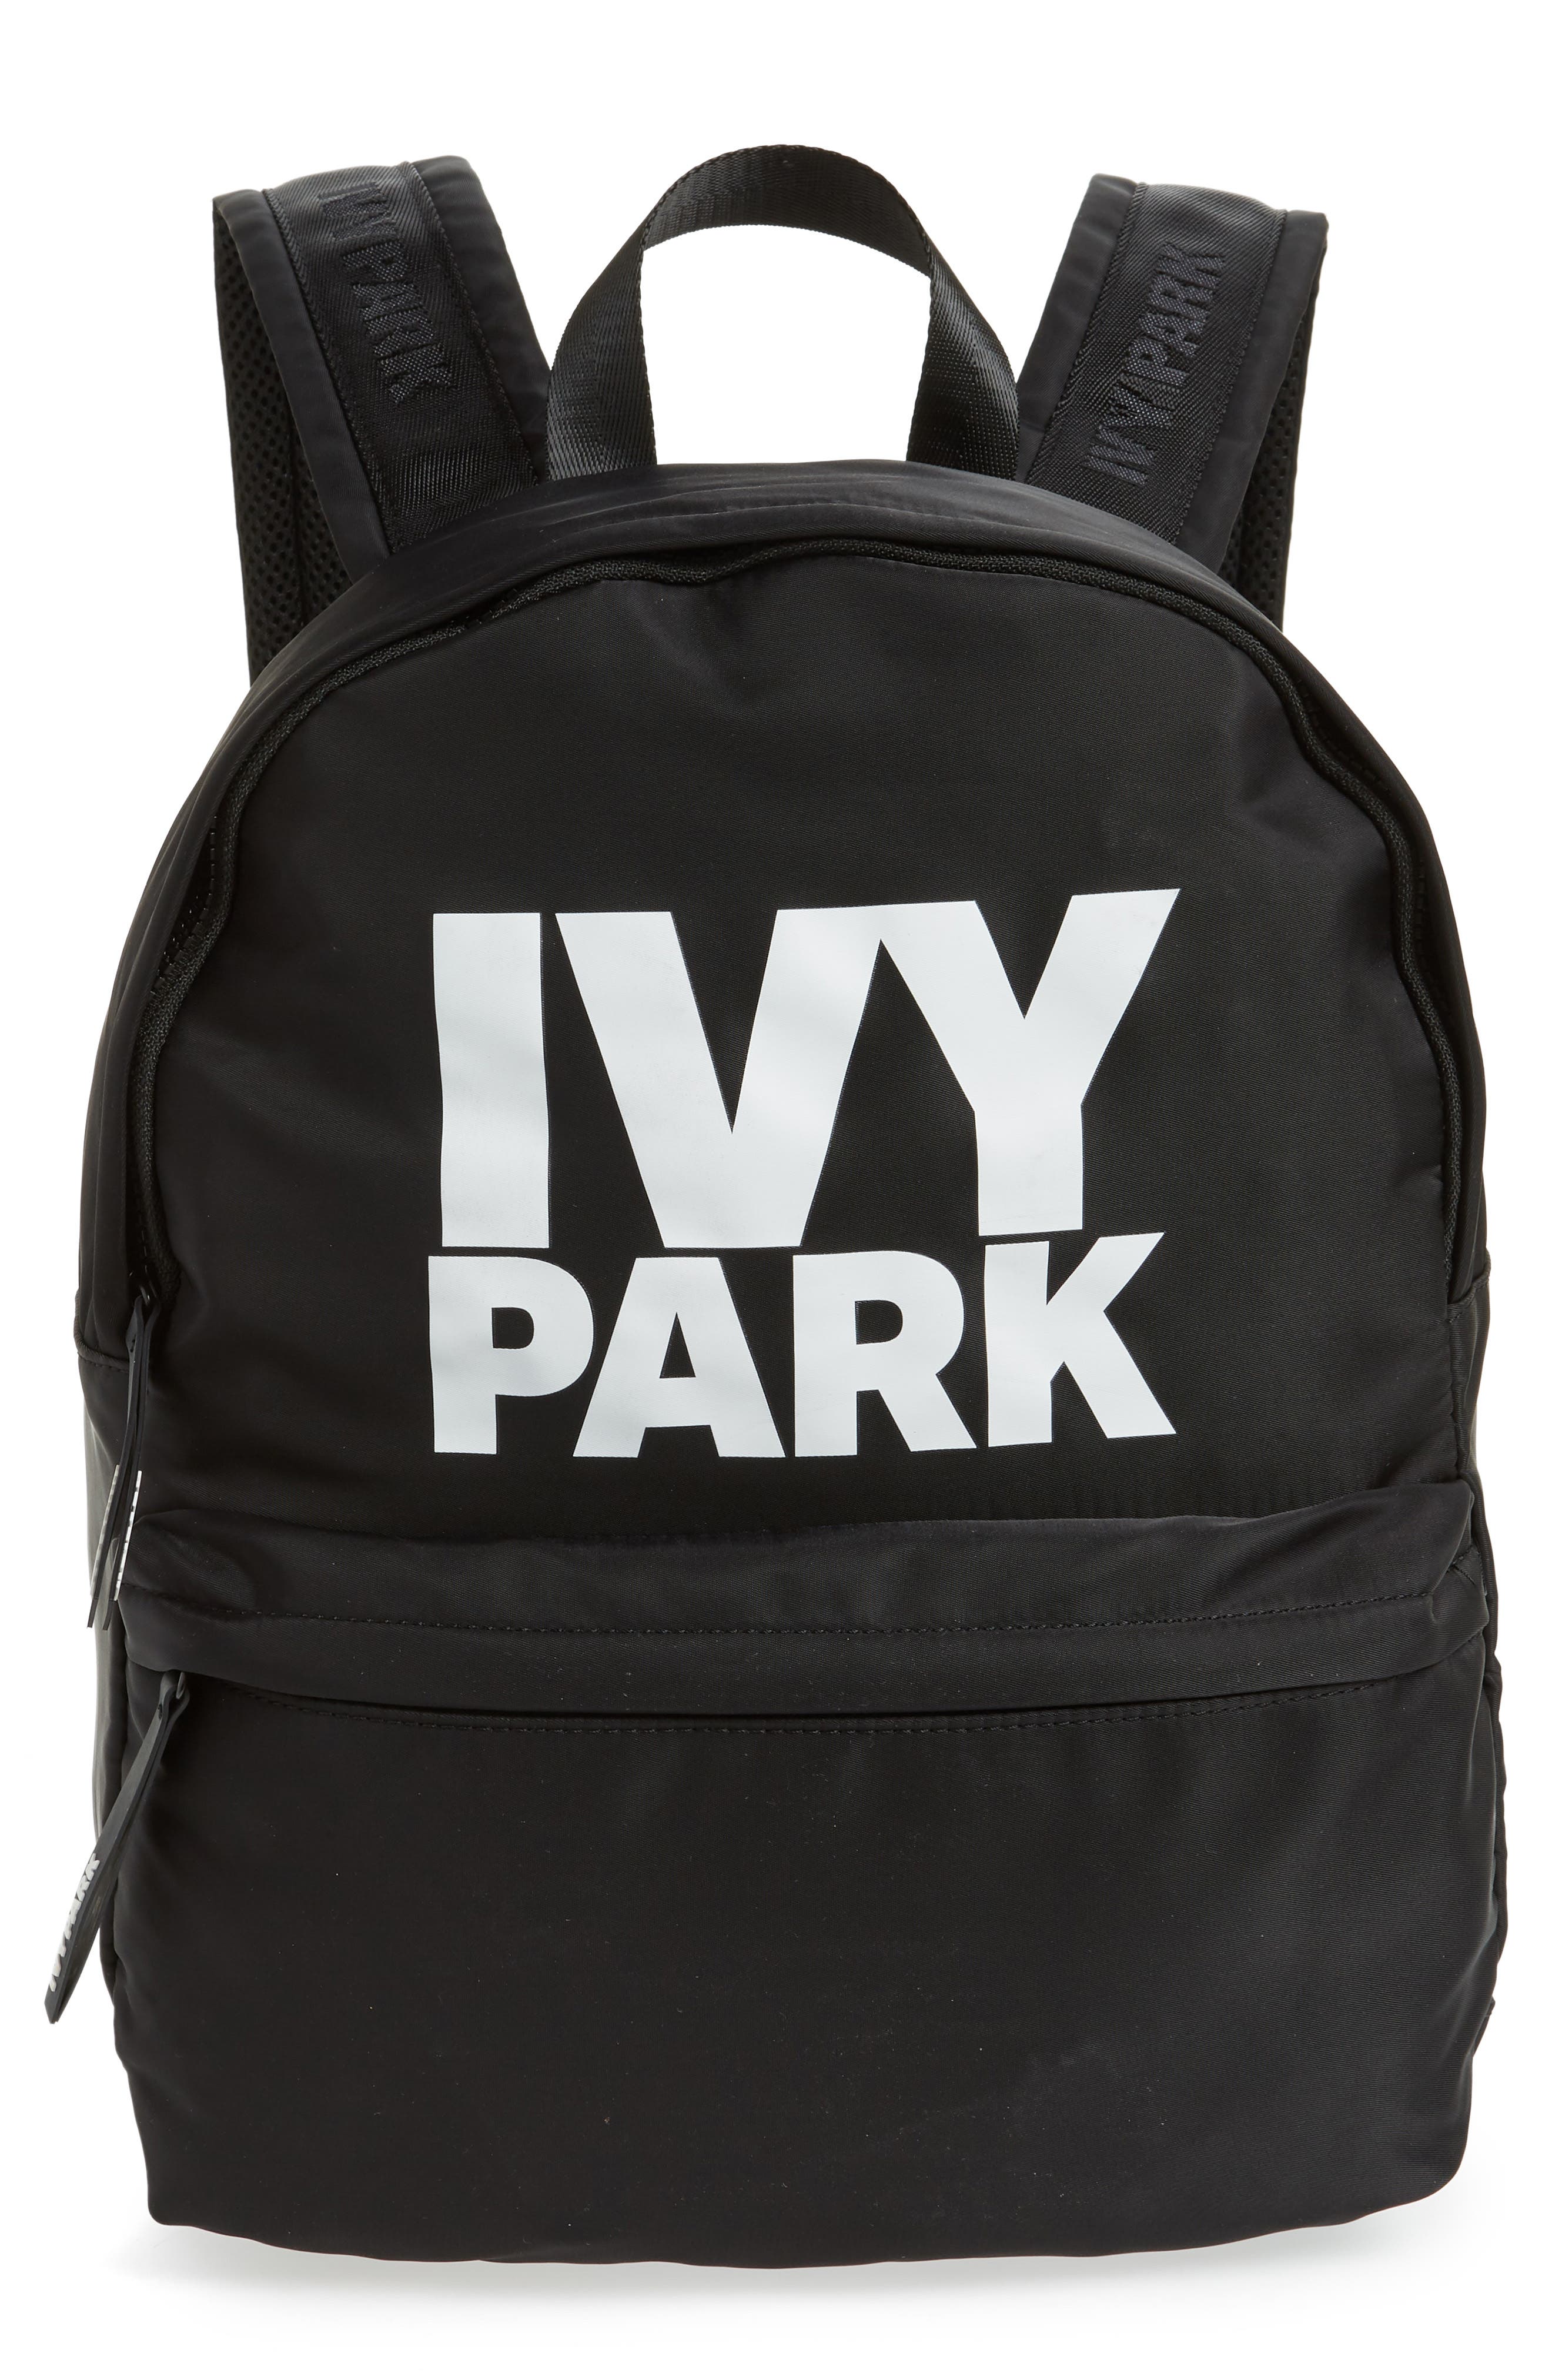 ivy park accessories